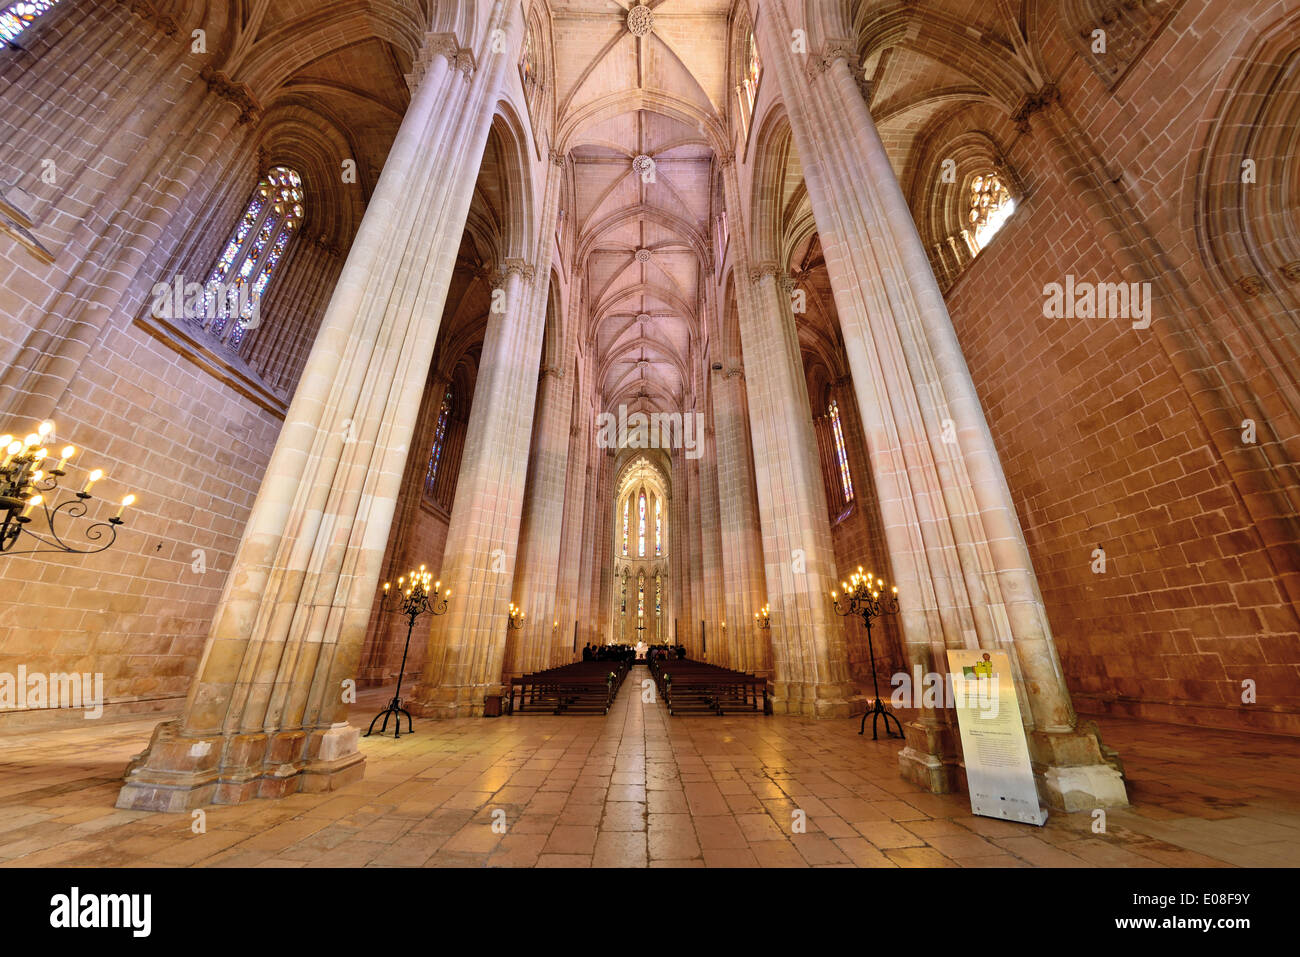 Portugal : vue intérieure de l'monasteric église de Santa Maria da Vitoria à Batalha Banque D'Images